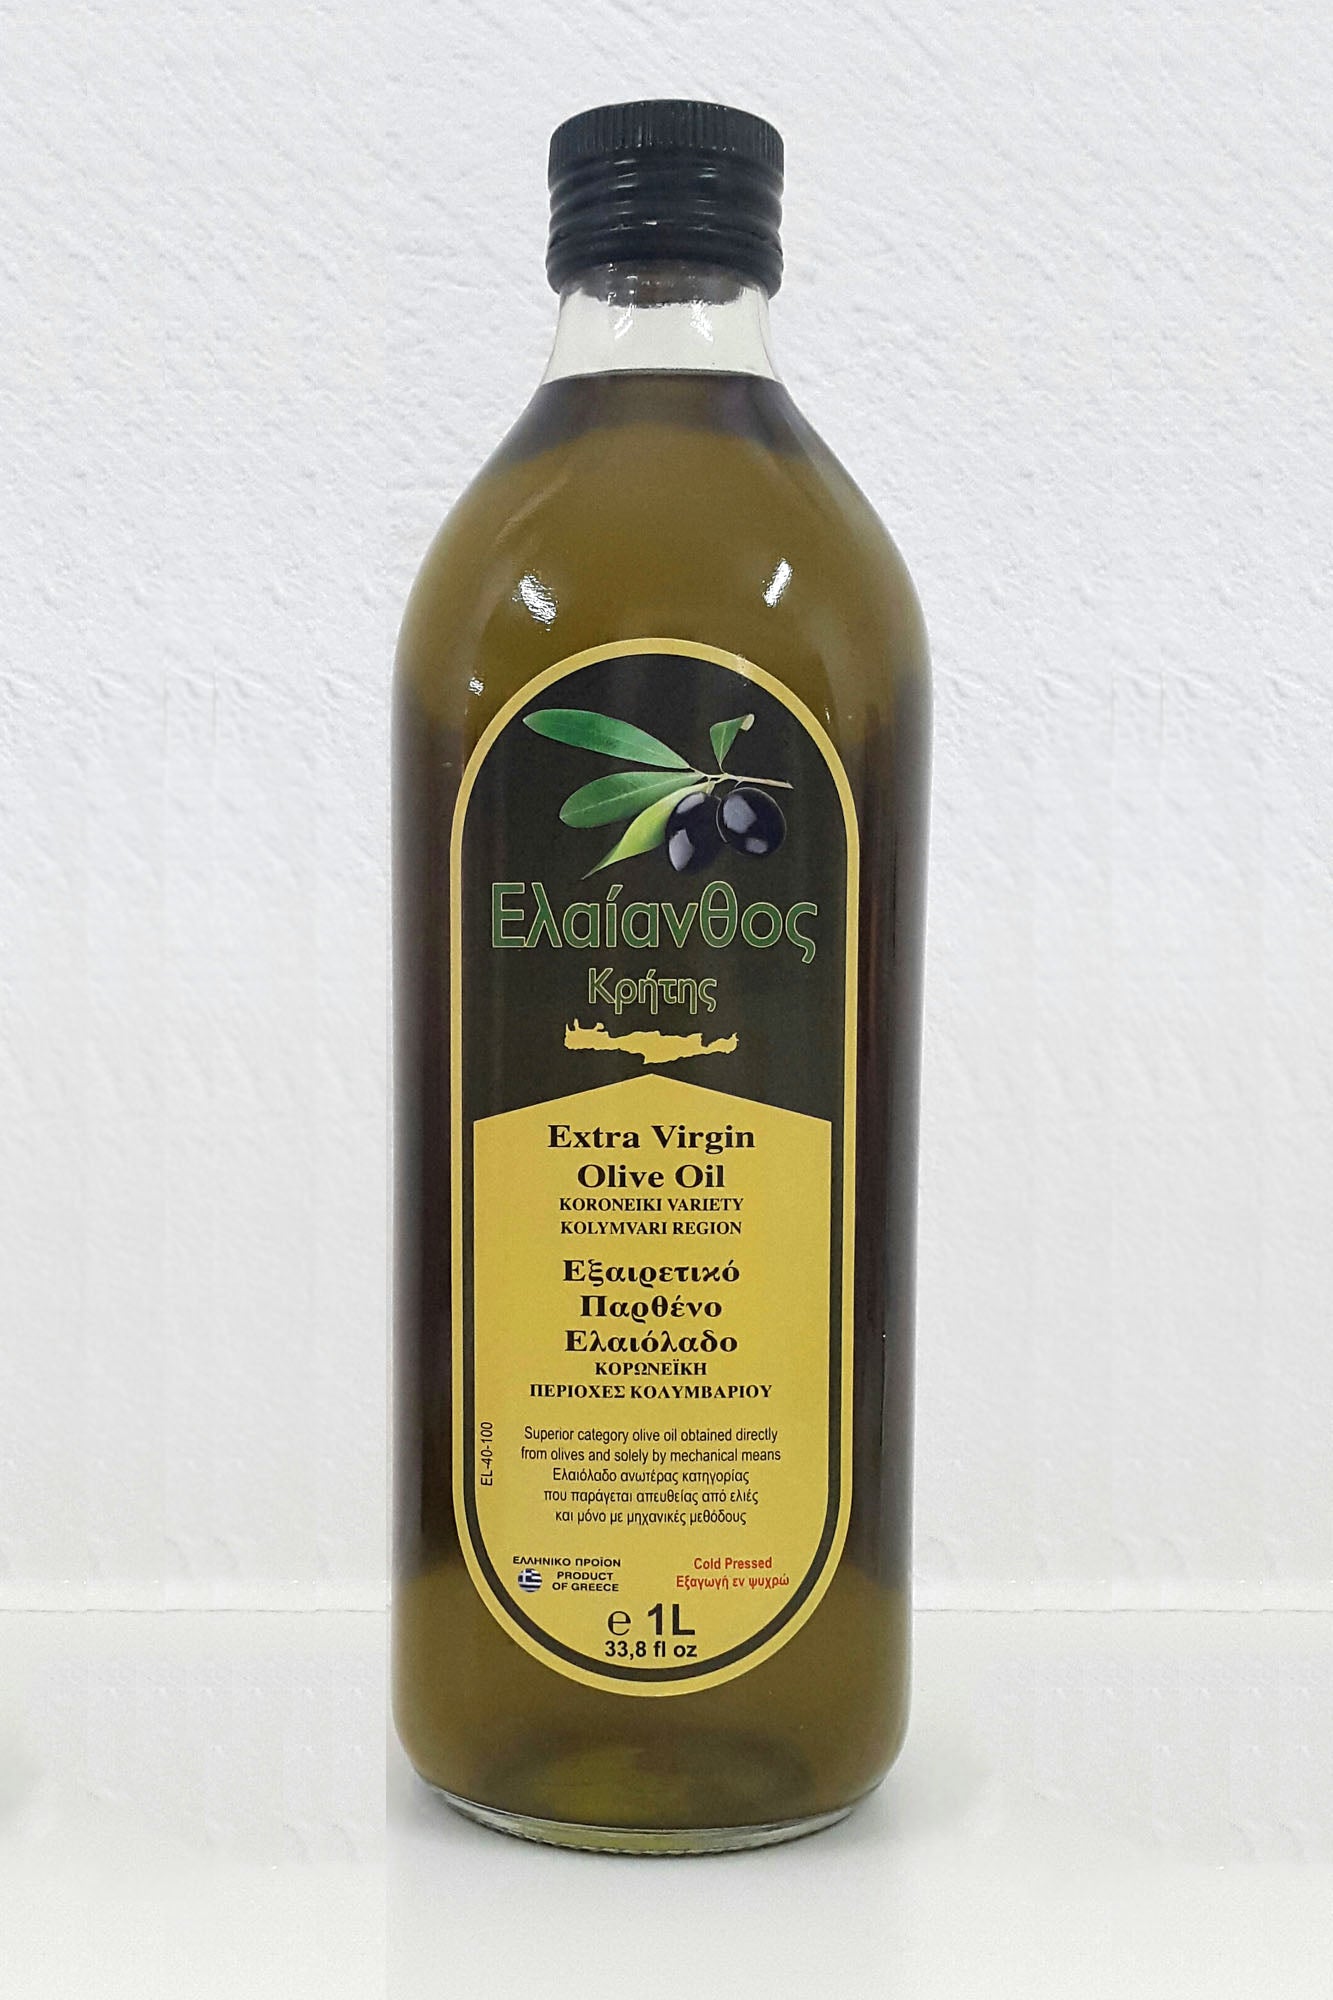 1lt Eleanthos Virgin Olive Oil. Koroneiko variety from Crete.